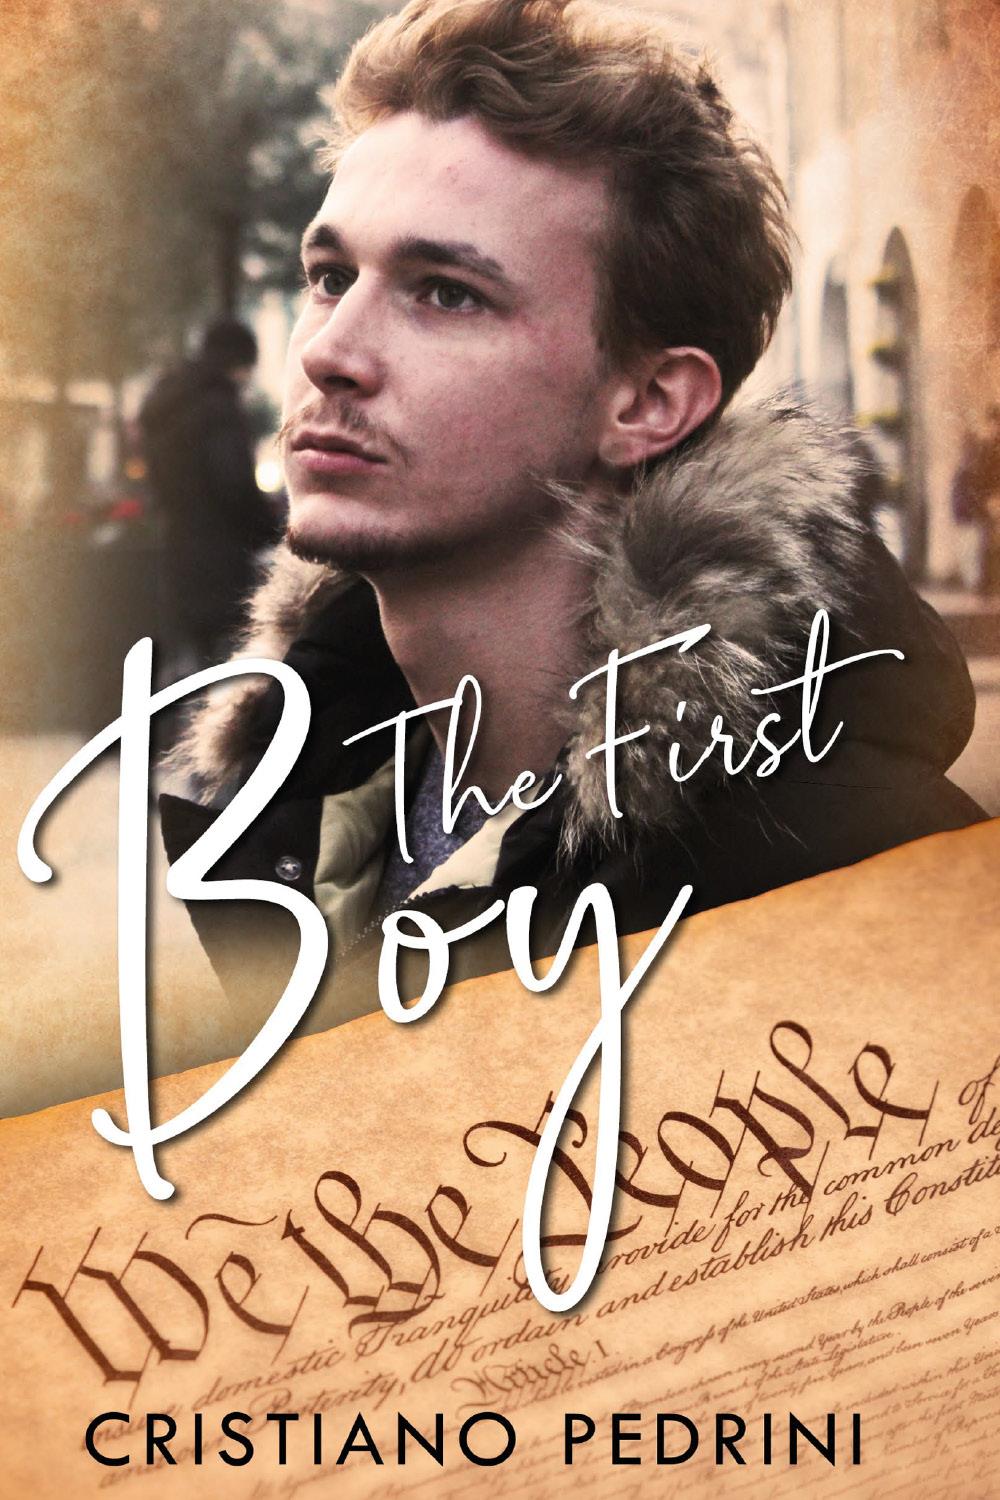 The first boy